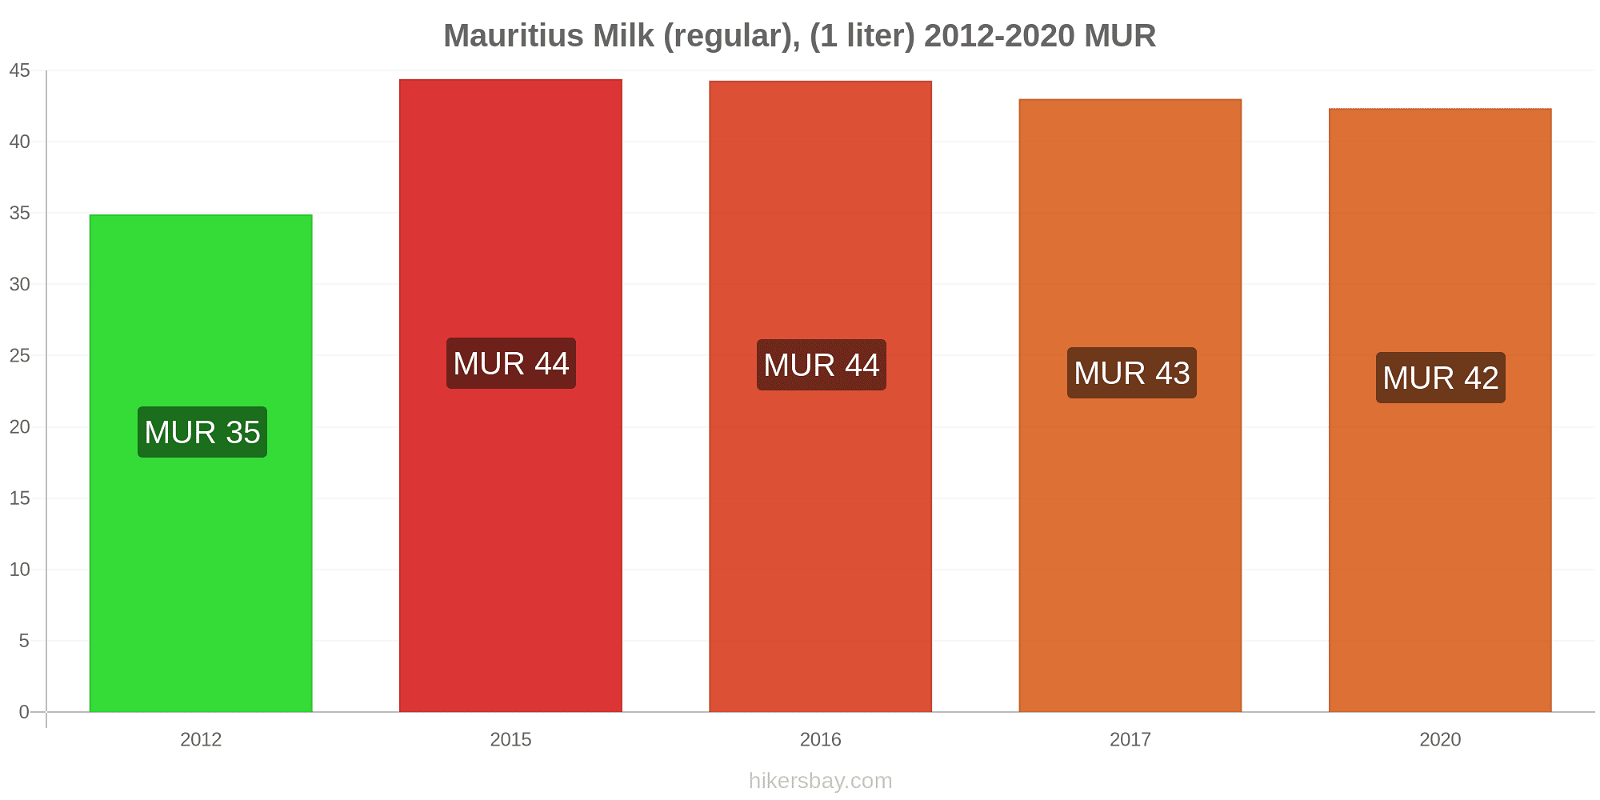 Mauritius price changes Milk (regular), (1 liter) hikersbay.com